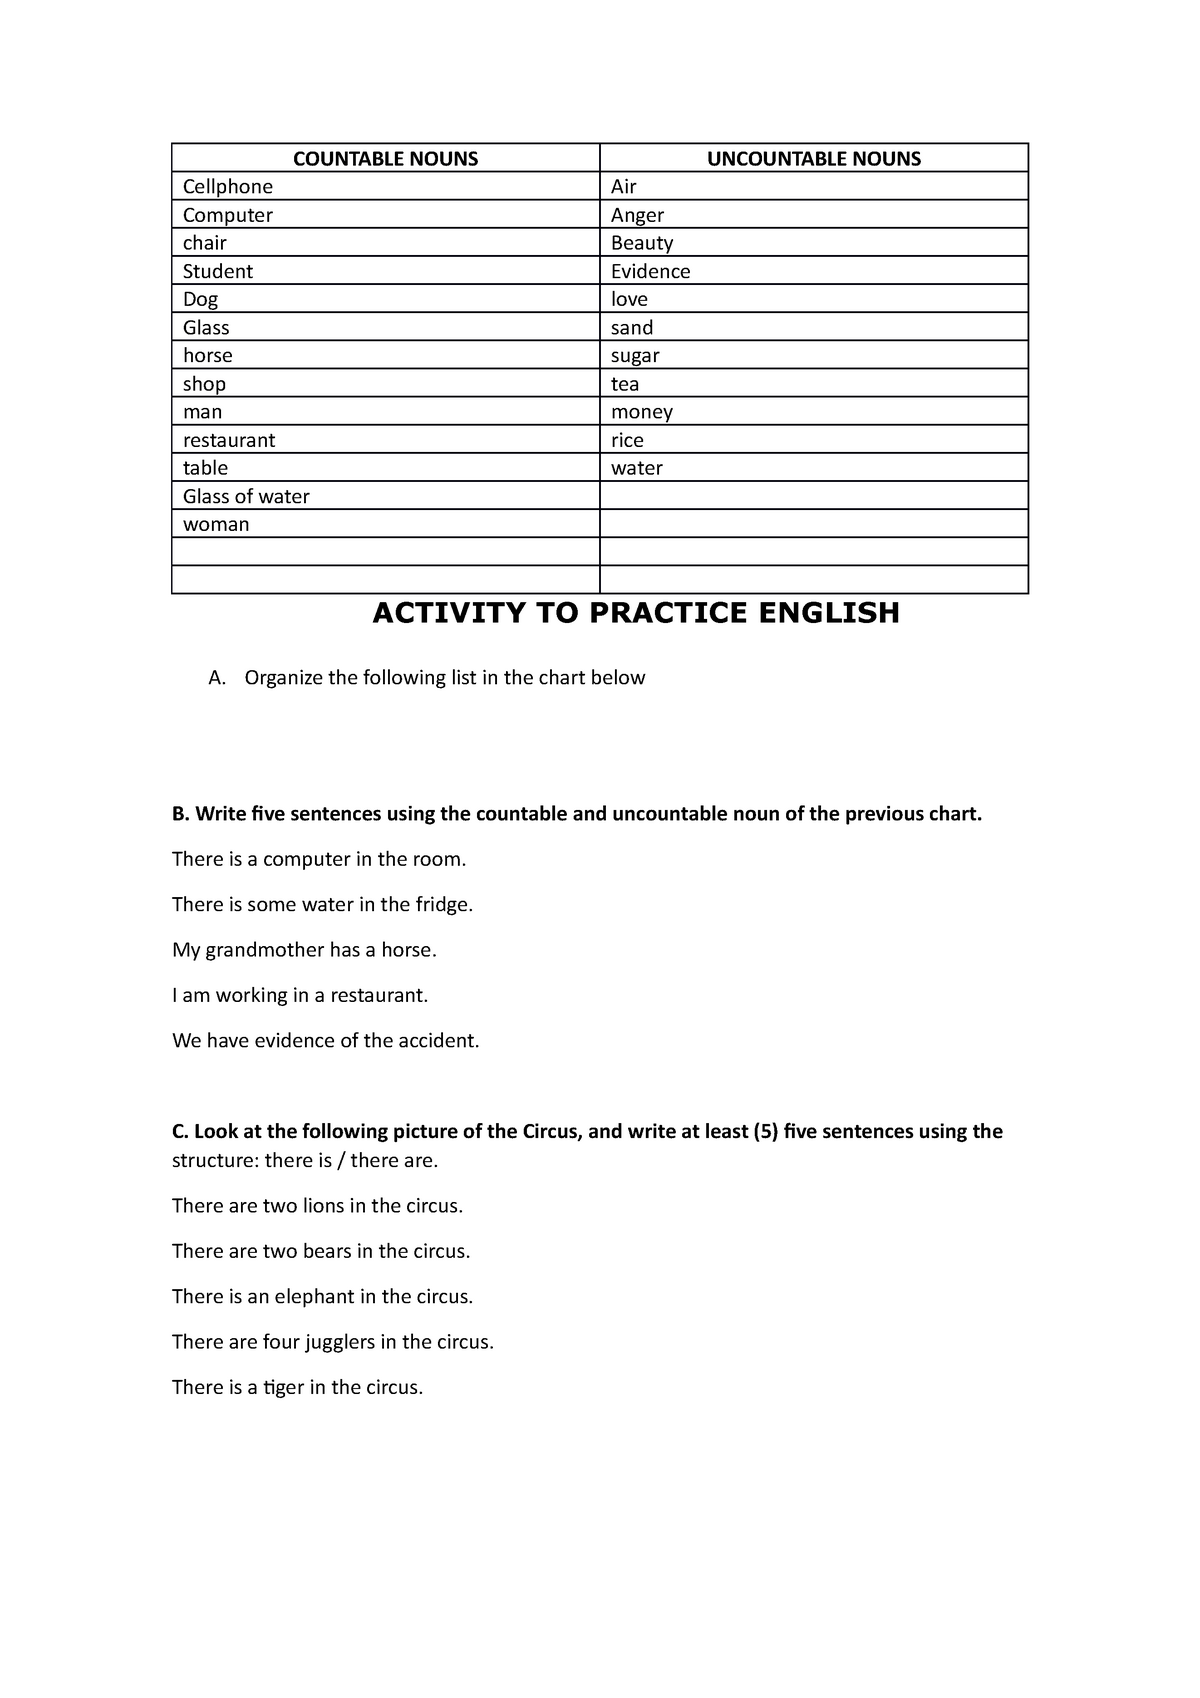 Activity TO Practice English Ingles UNAD Studocu